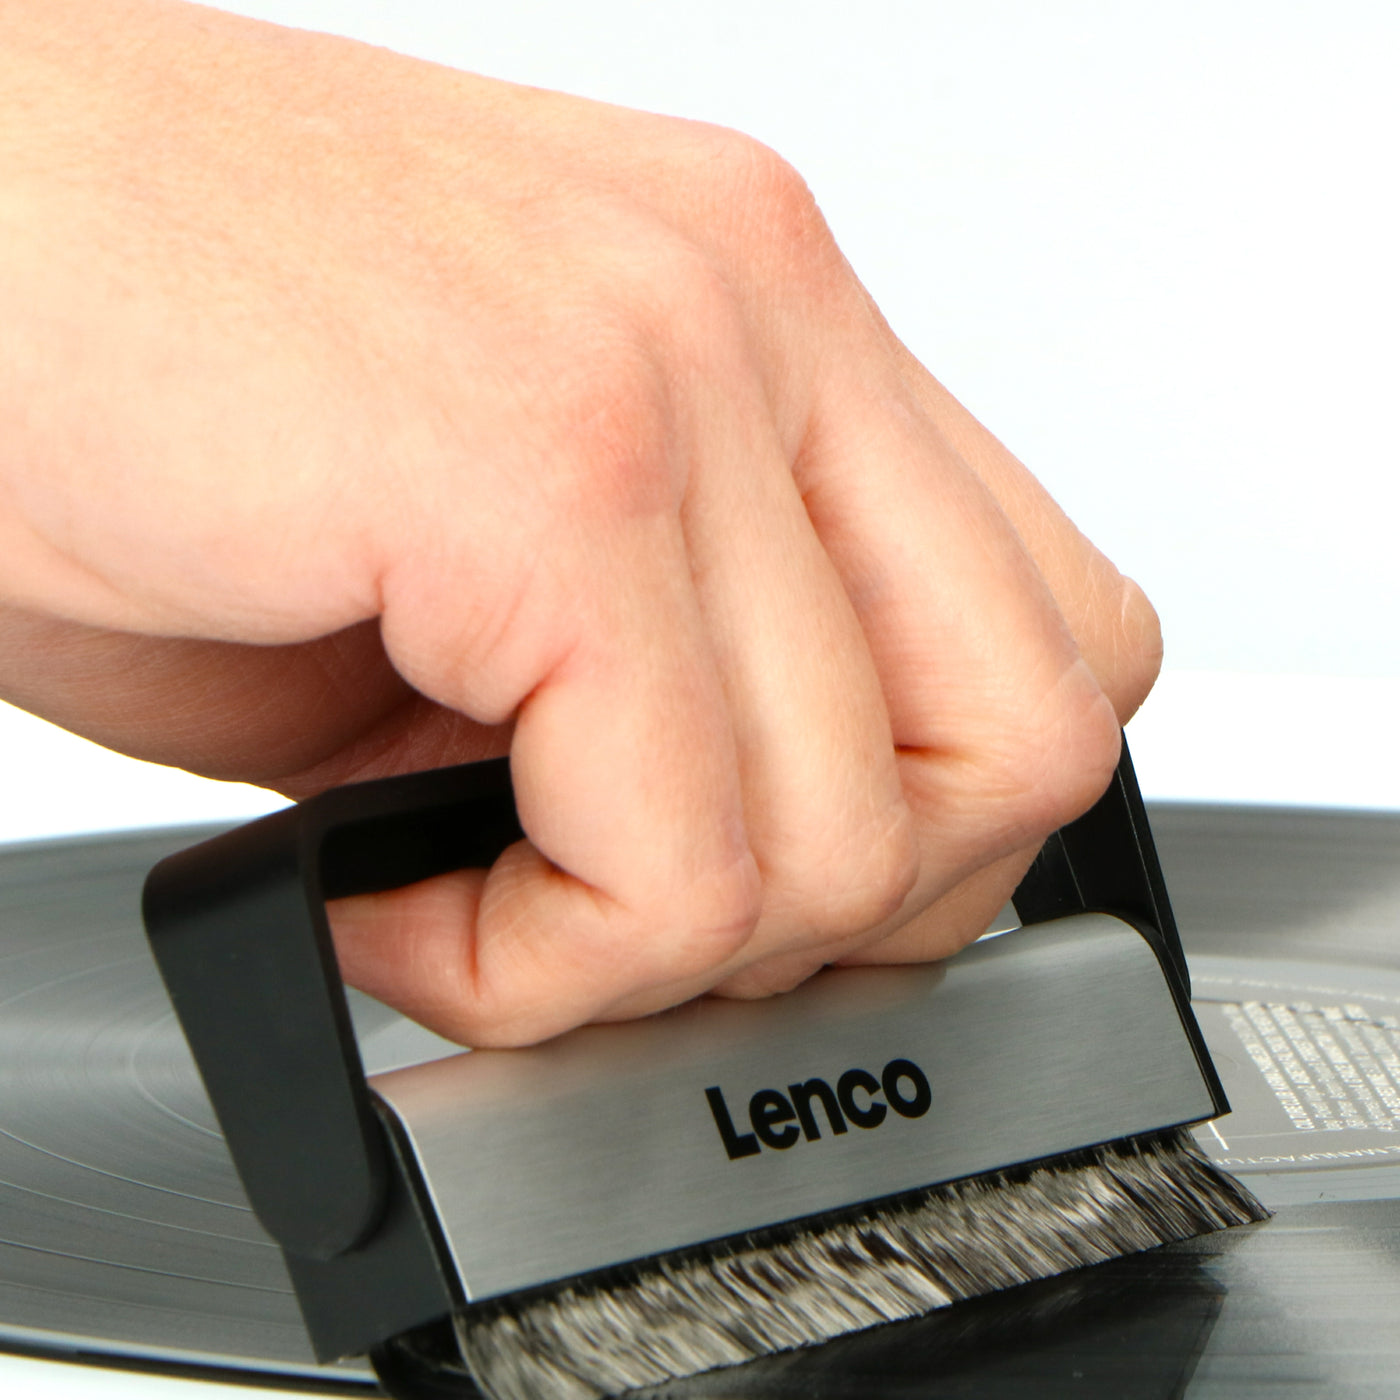 LENCO TTA-3IN1 - Carbon fiber record cleaning brush